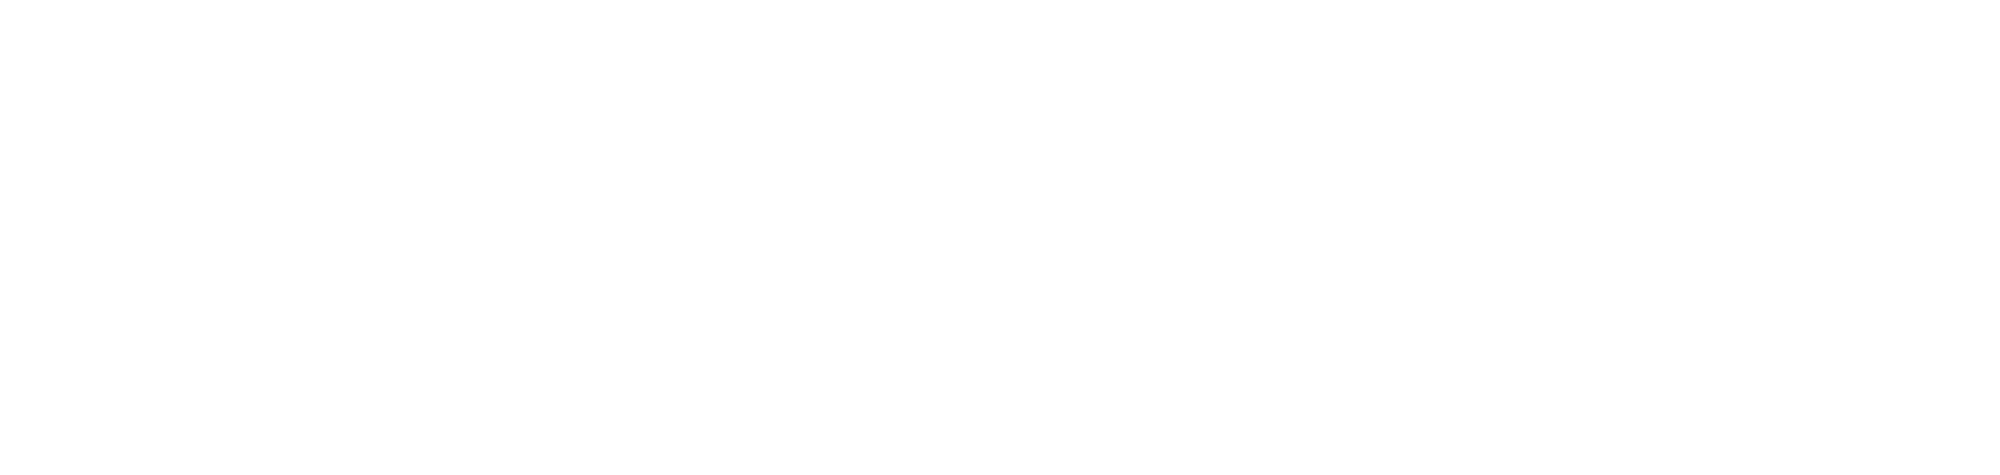 BrightBlueC-Website-Graphic-Design-Devon.png